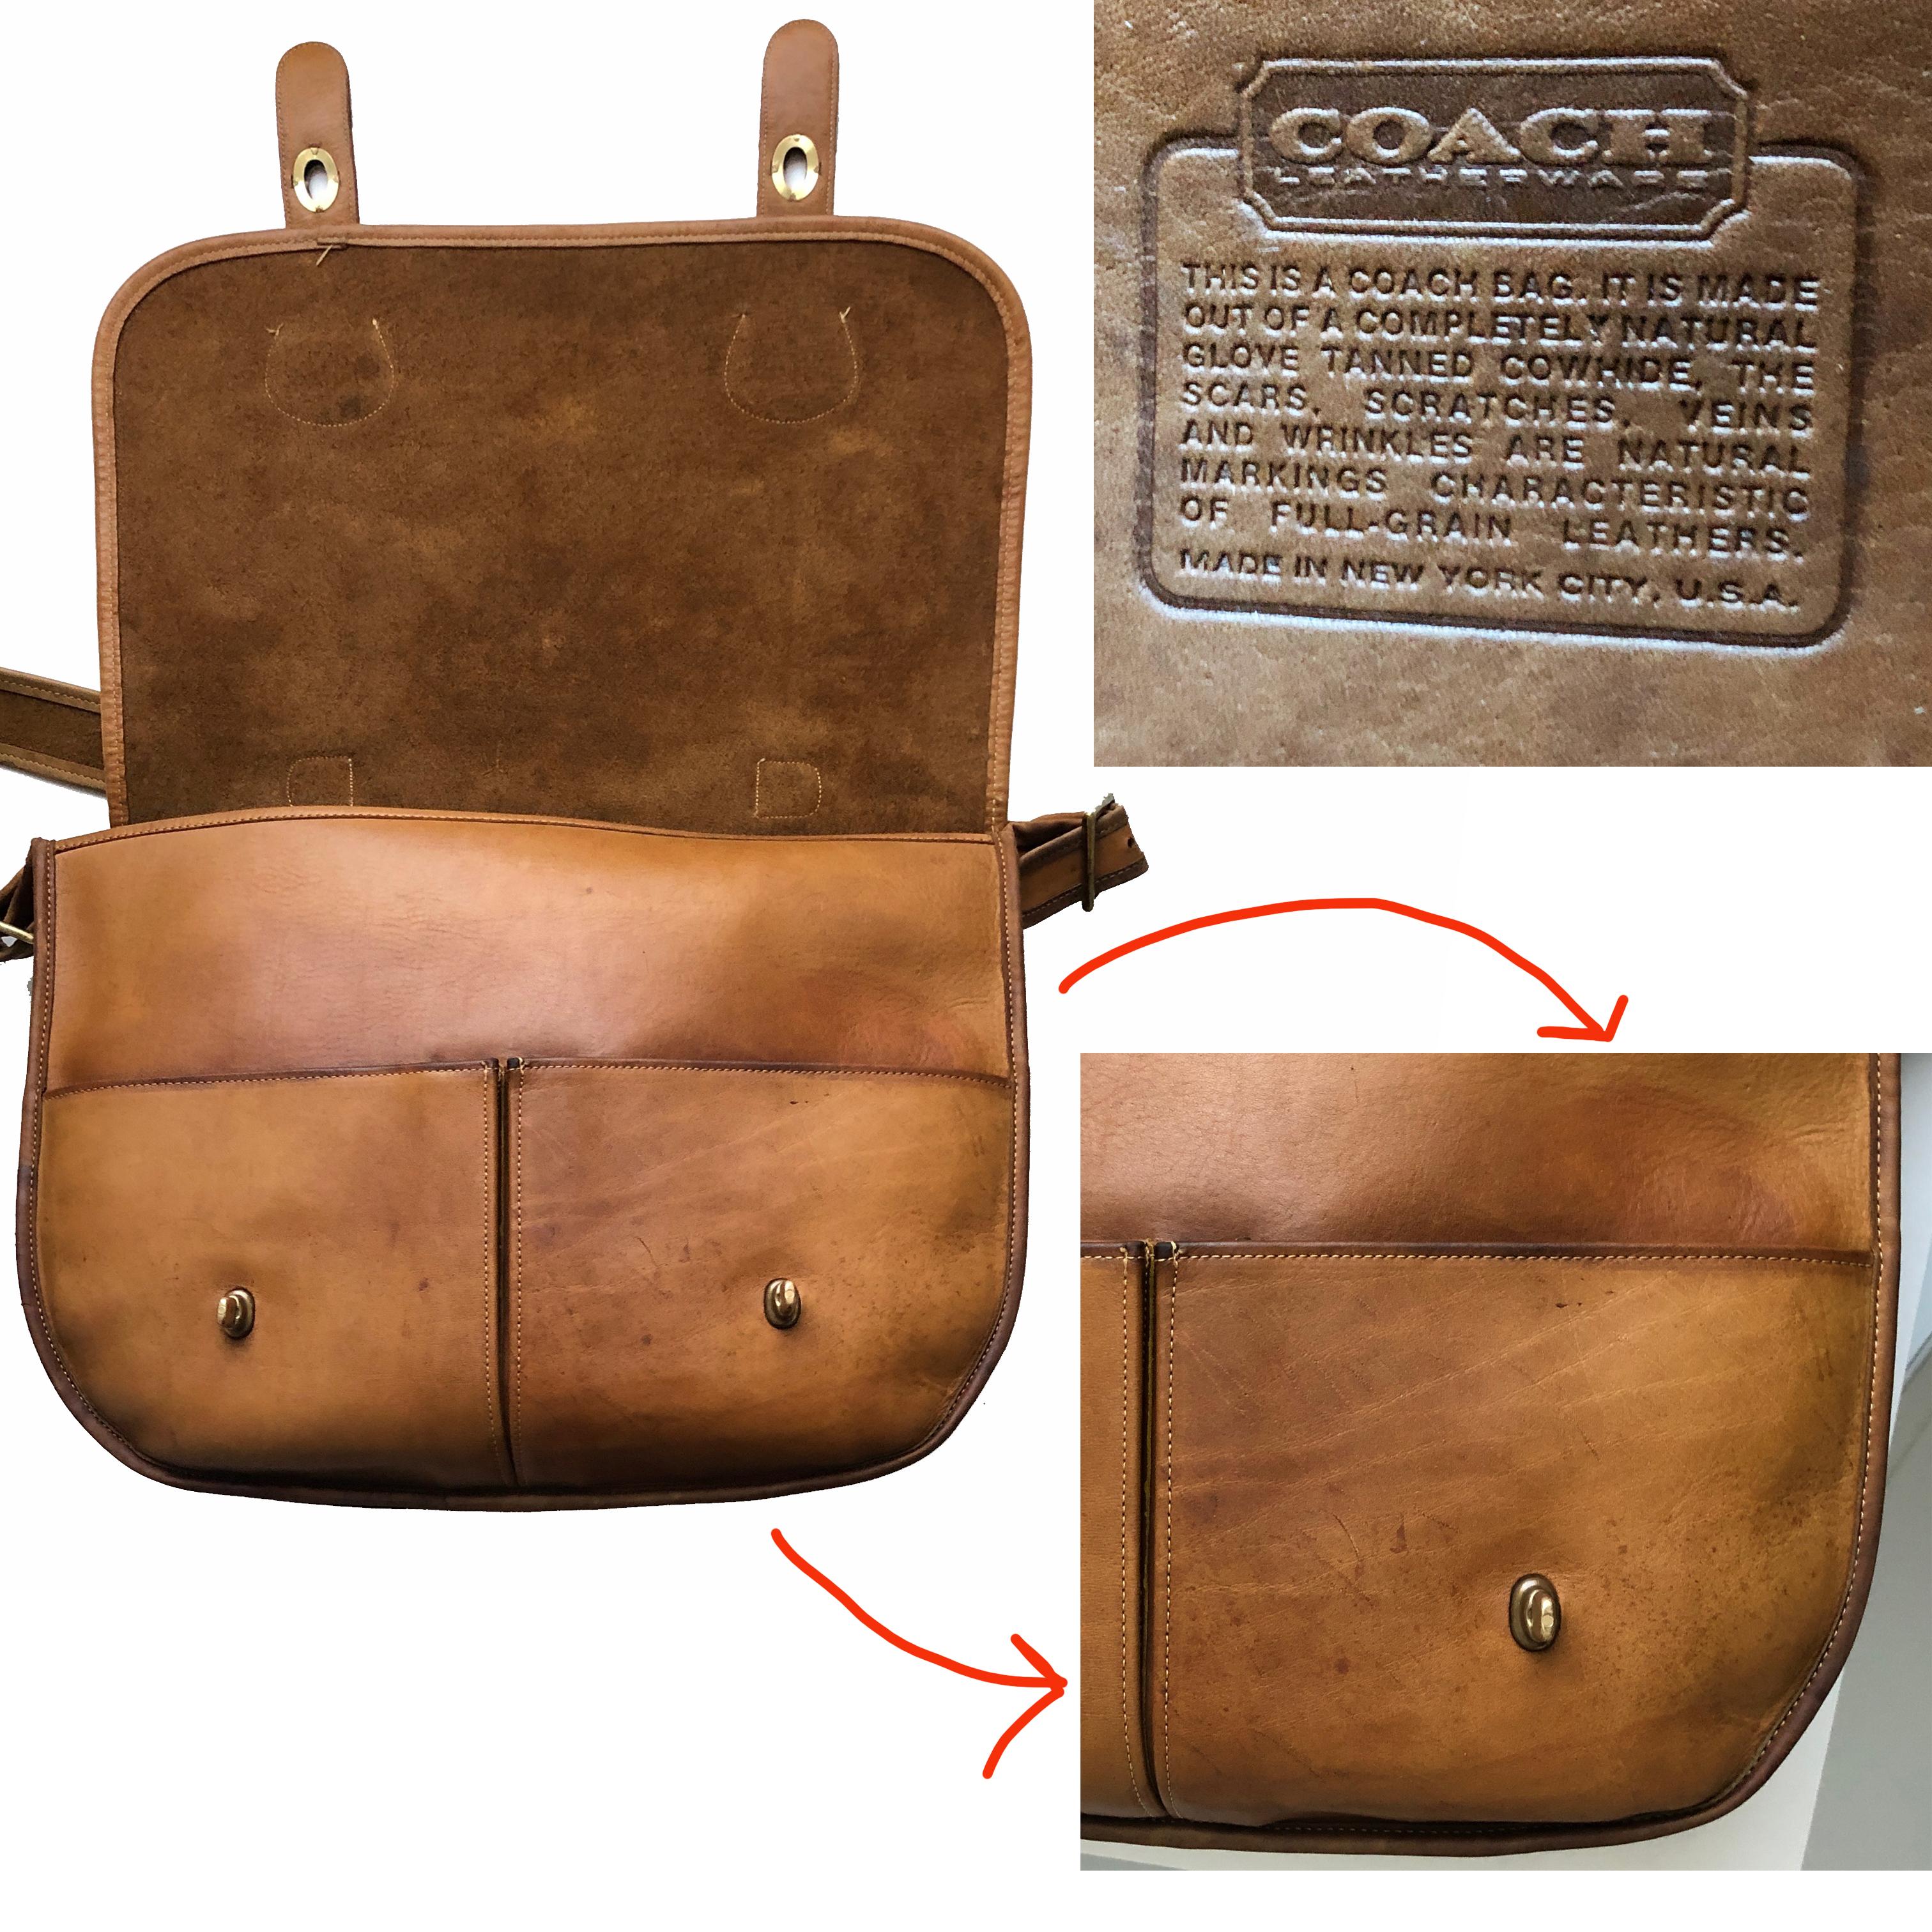 Coach Swag Bag Bonnie Cashin Large Leather Messenger Vintage 60s NYC Bag Rare 4